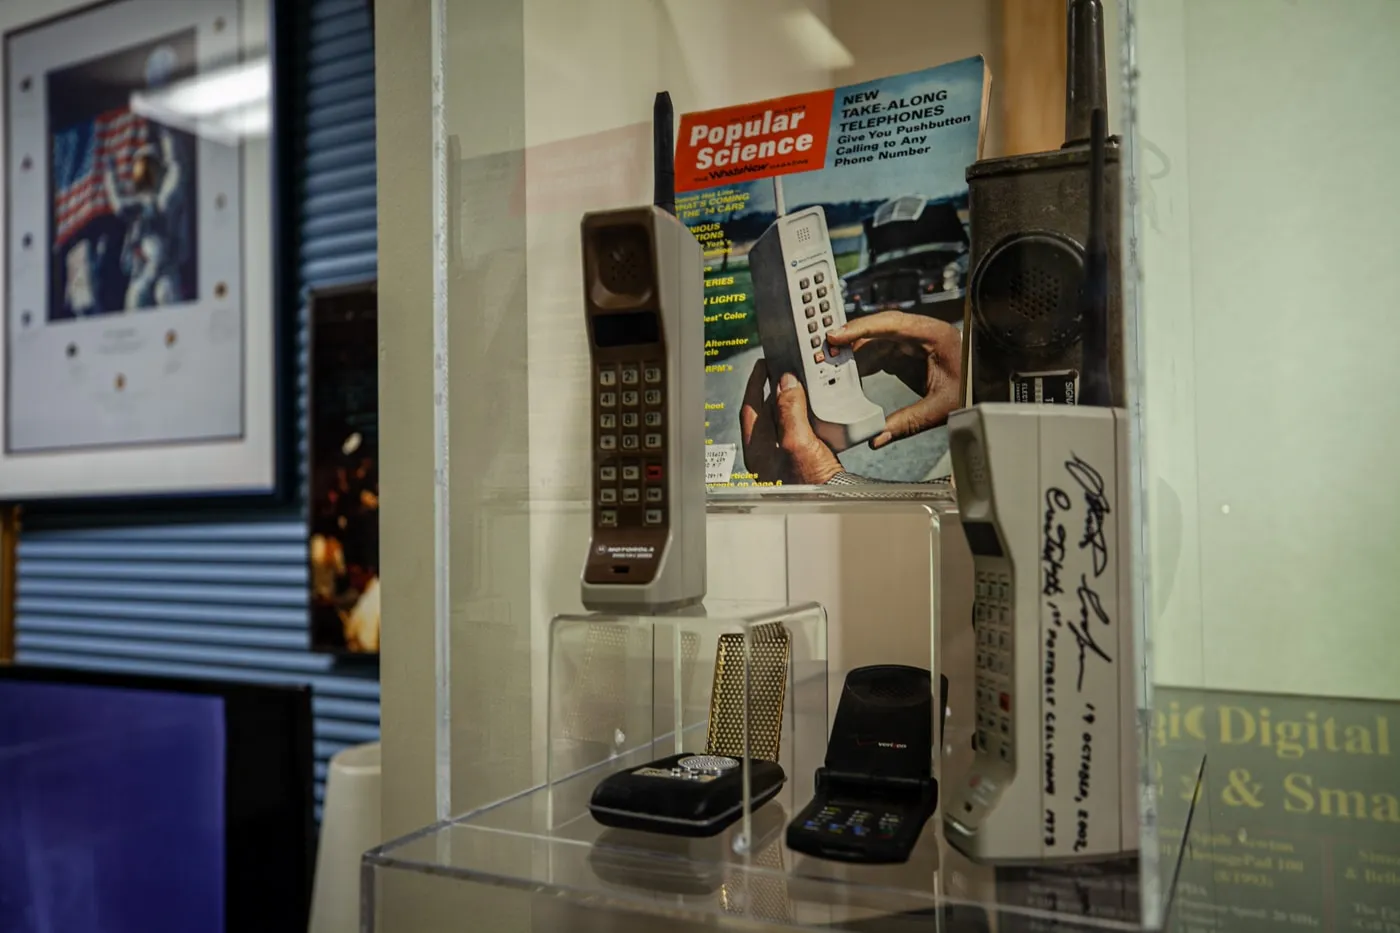 Take-along telephones - American Computer & Robotics Museum in Bozeman, Montana